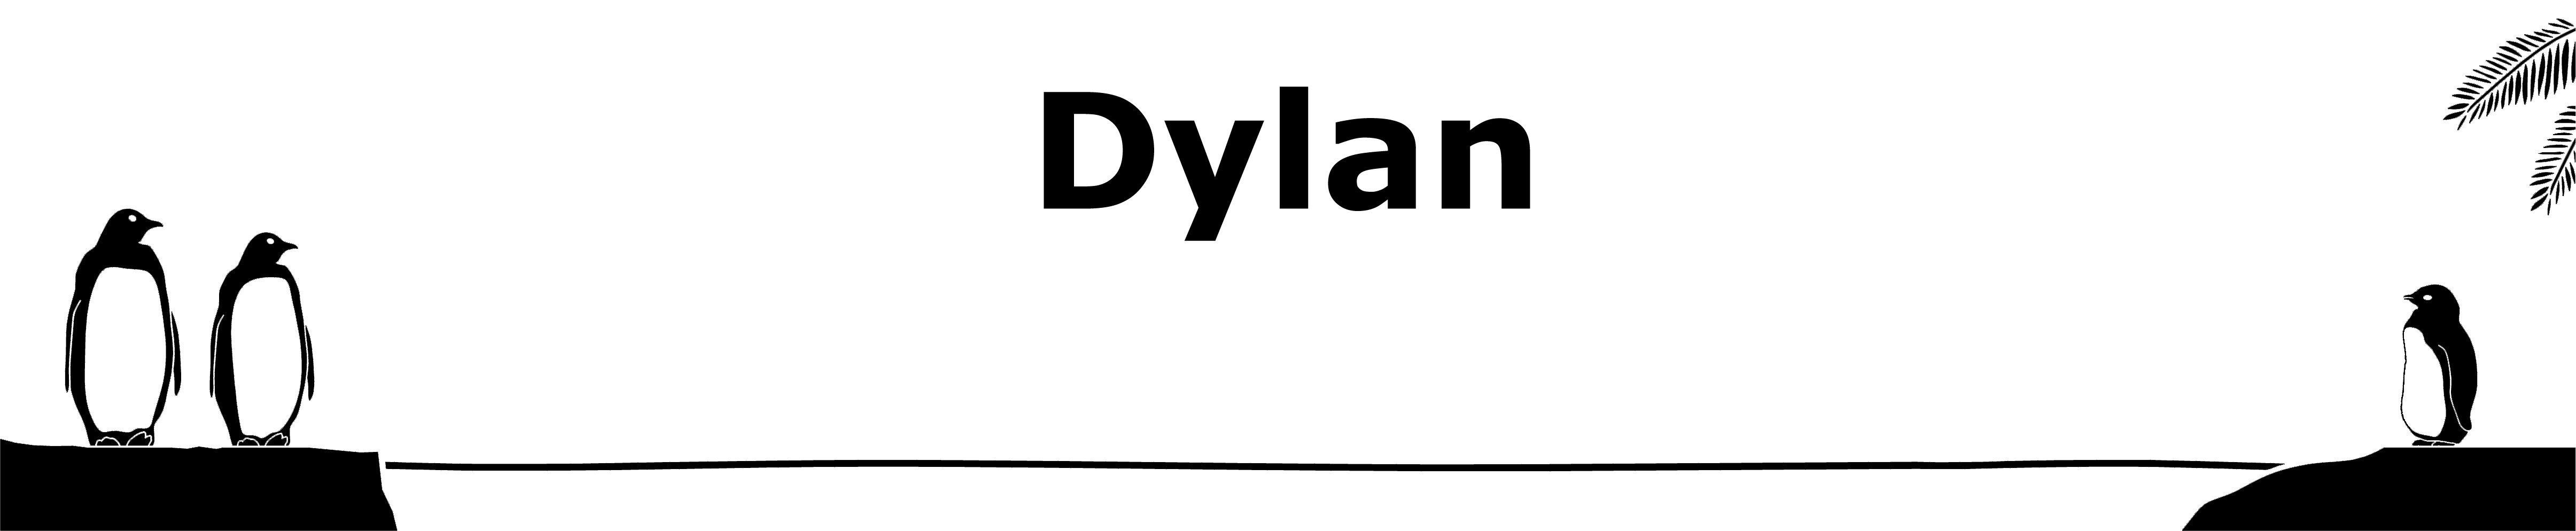 Dr Martin Smit Writing Architect Dylan